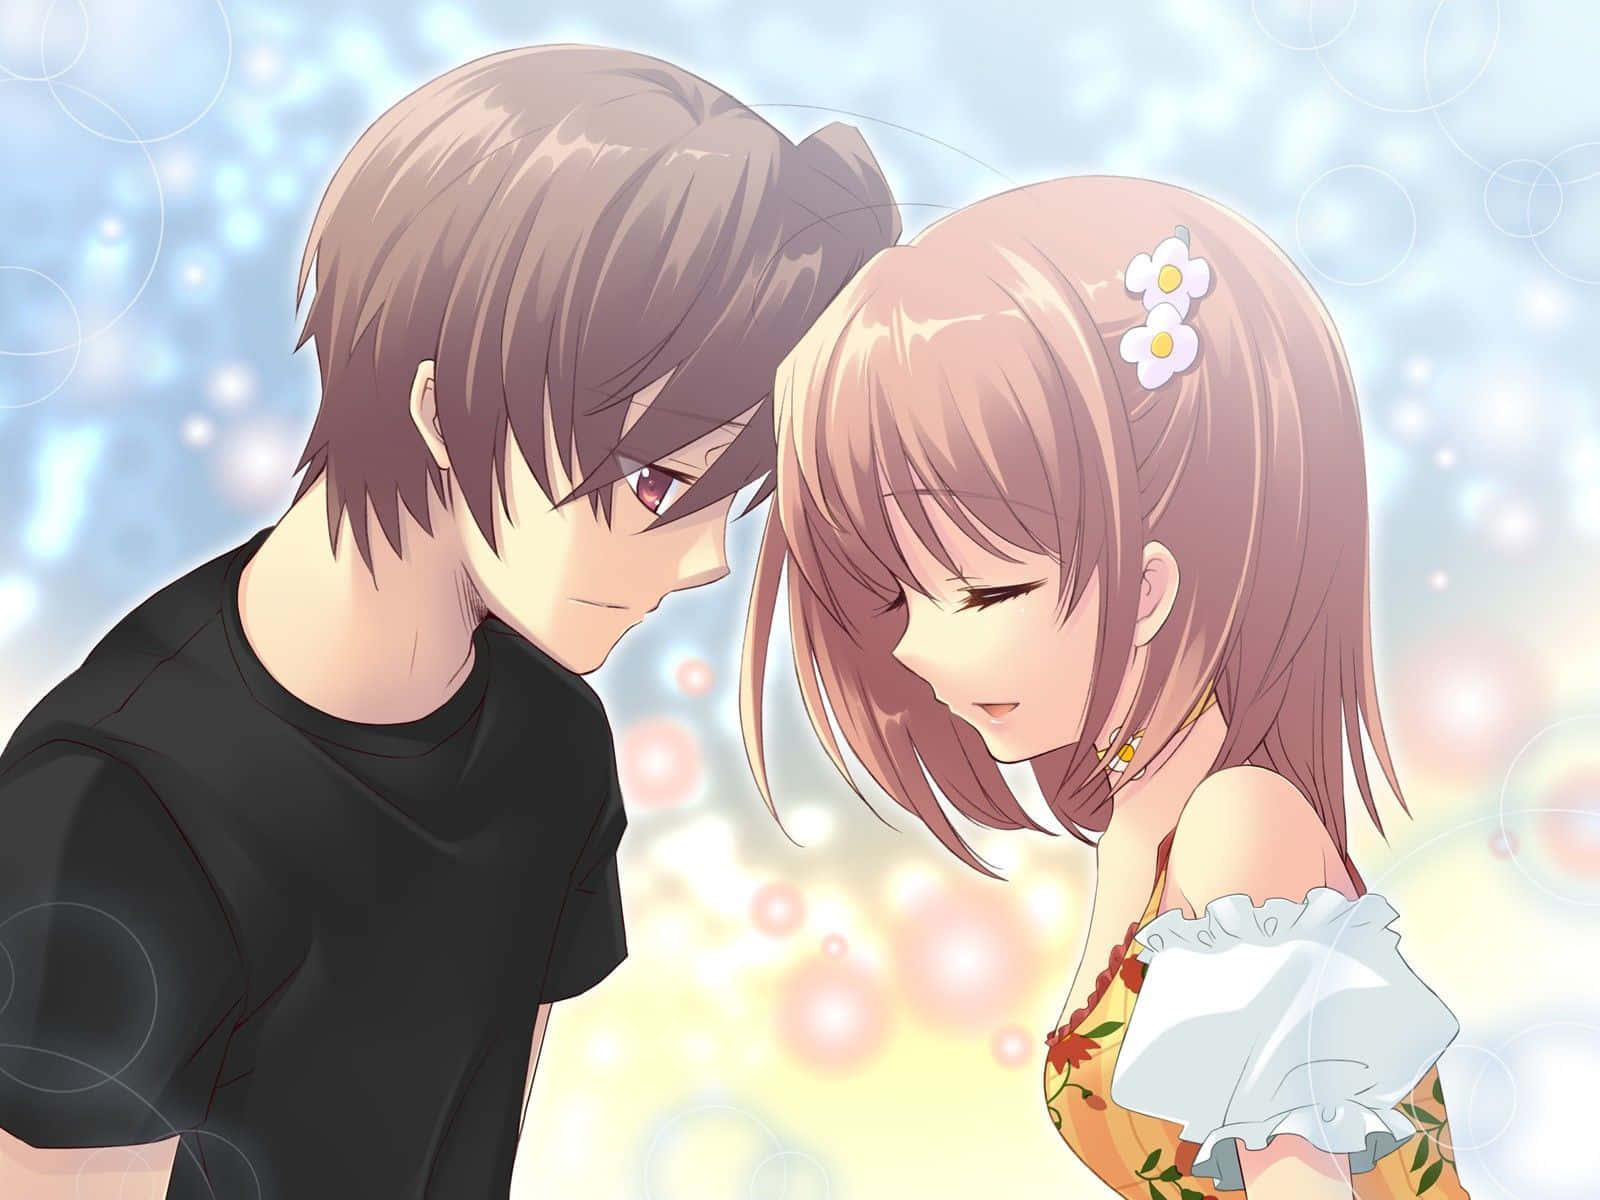 Love Couple Anime Images  Free Download on Freepik